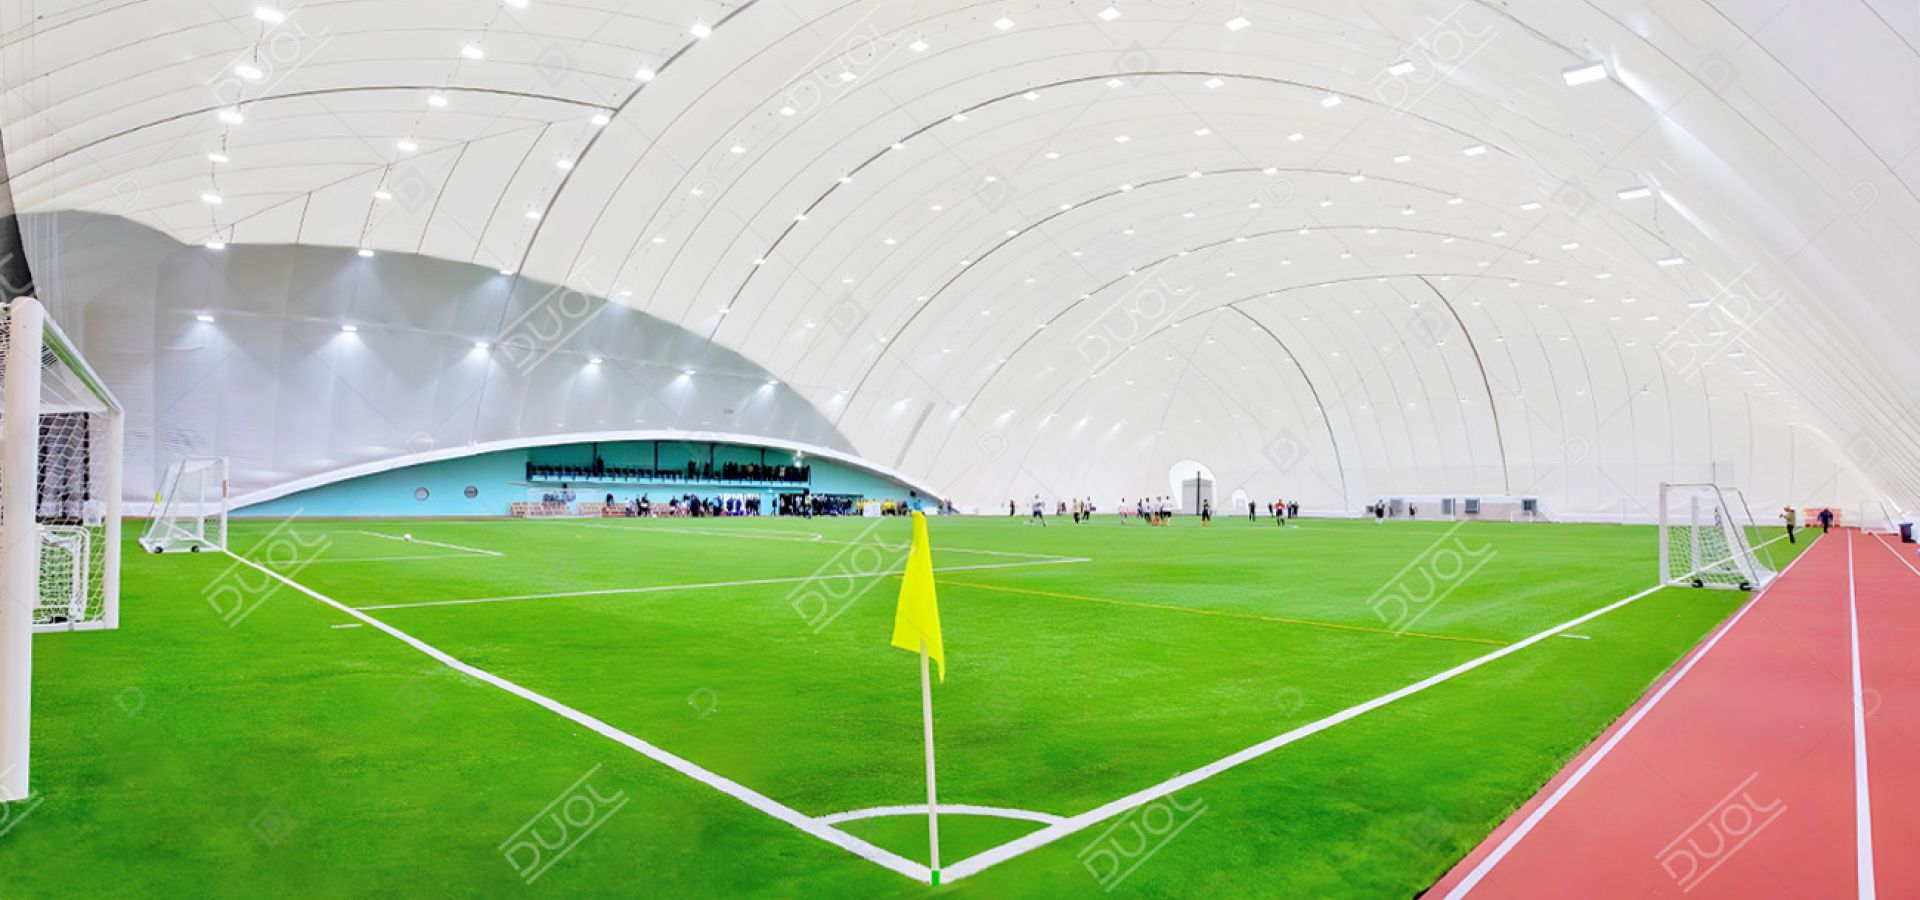 https://duol.eu/storage/app/media/products/football/thumb/1920x900.crop/Football-air-dome-indoor-soccer-4.jpg